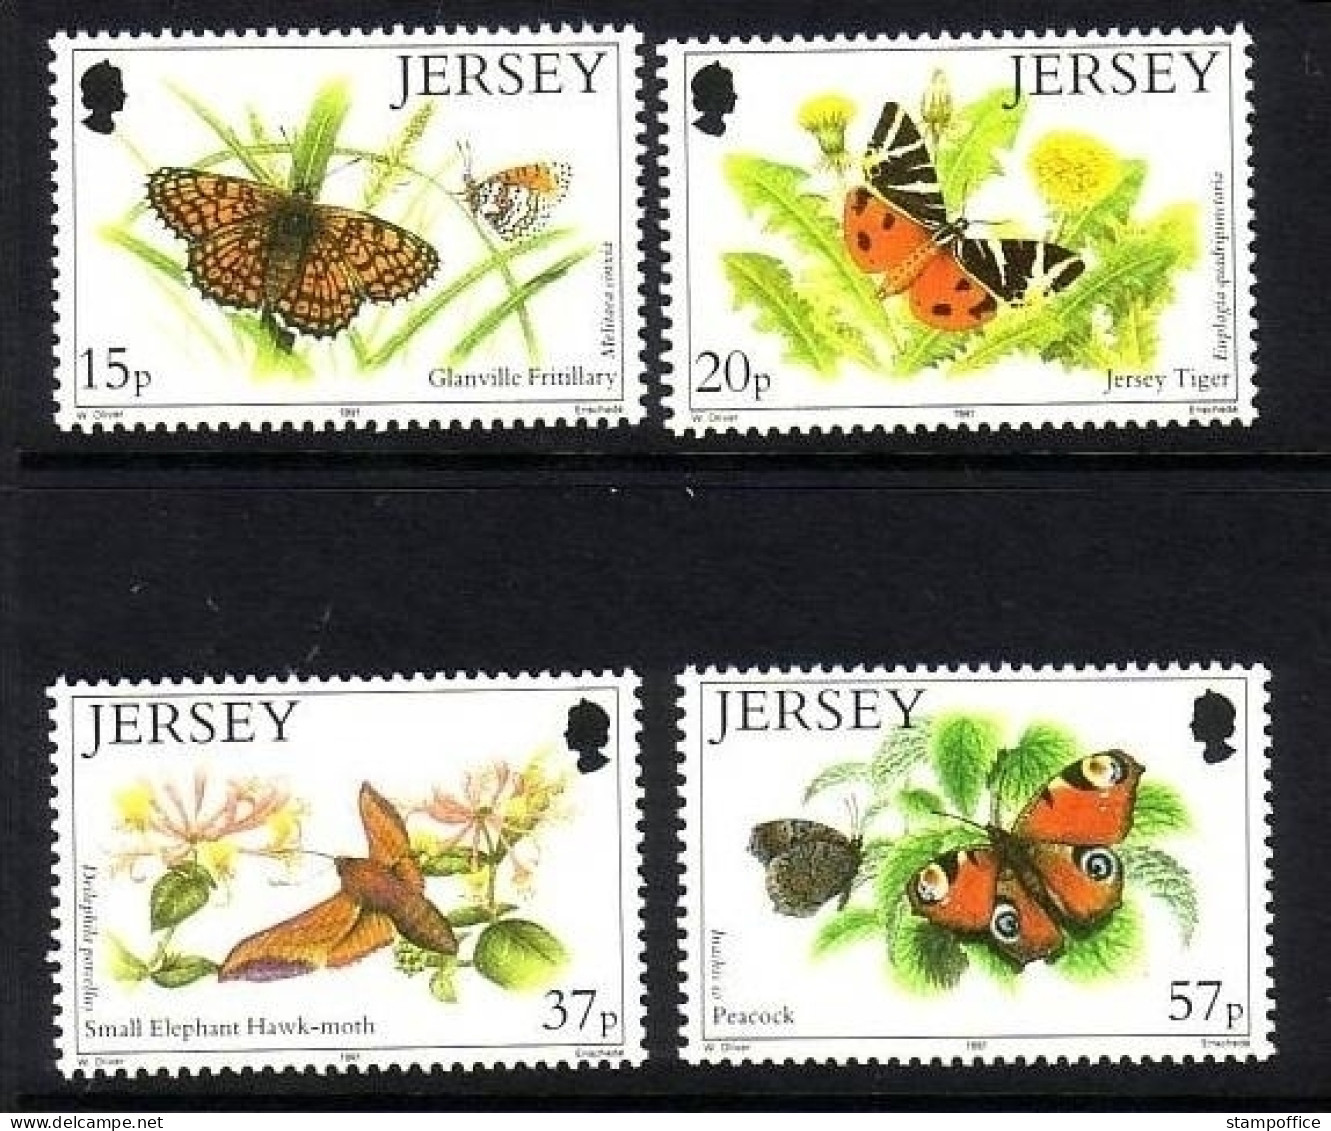 JERSEY MI-NR. 549-552 POSTFRISCH(MINT) SCHMETTERLINGE (I) 1991 - Papillons